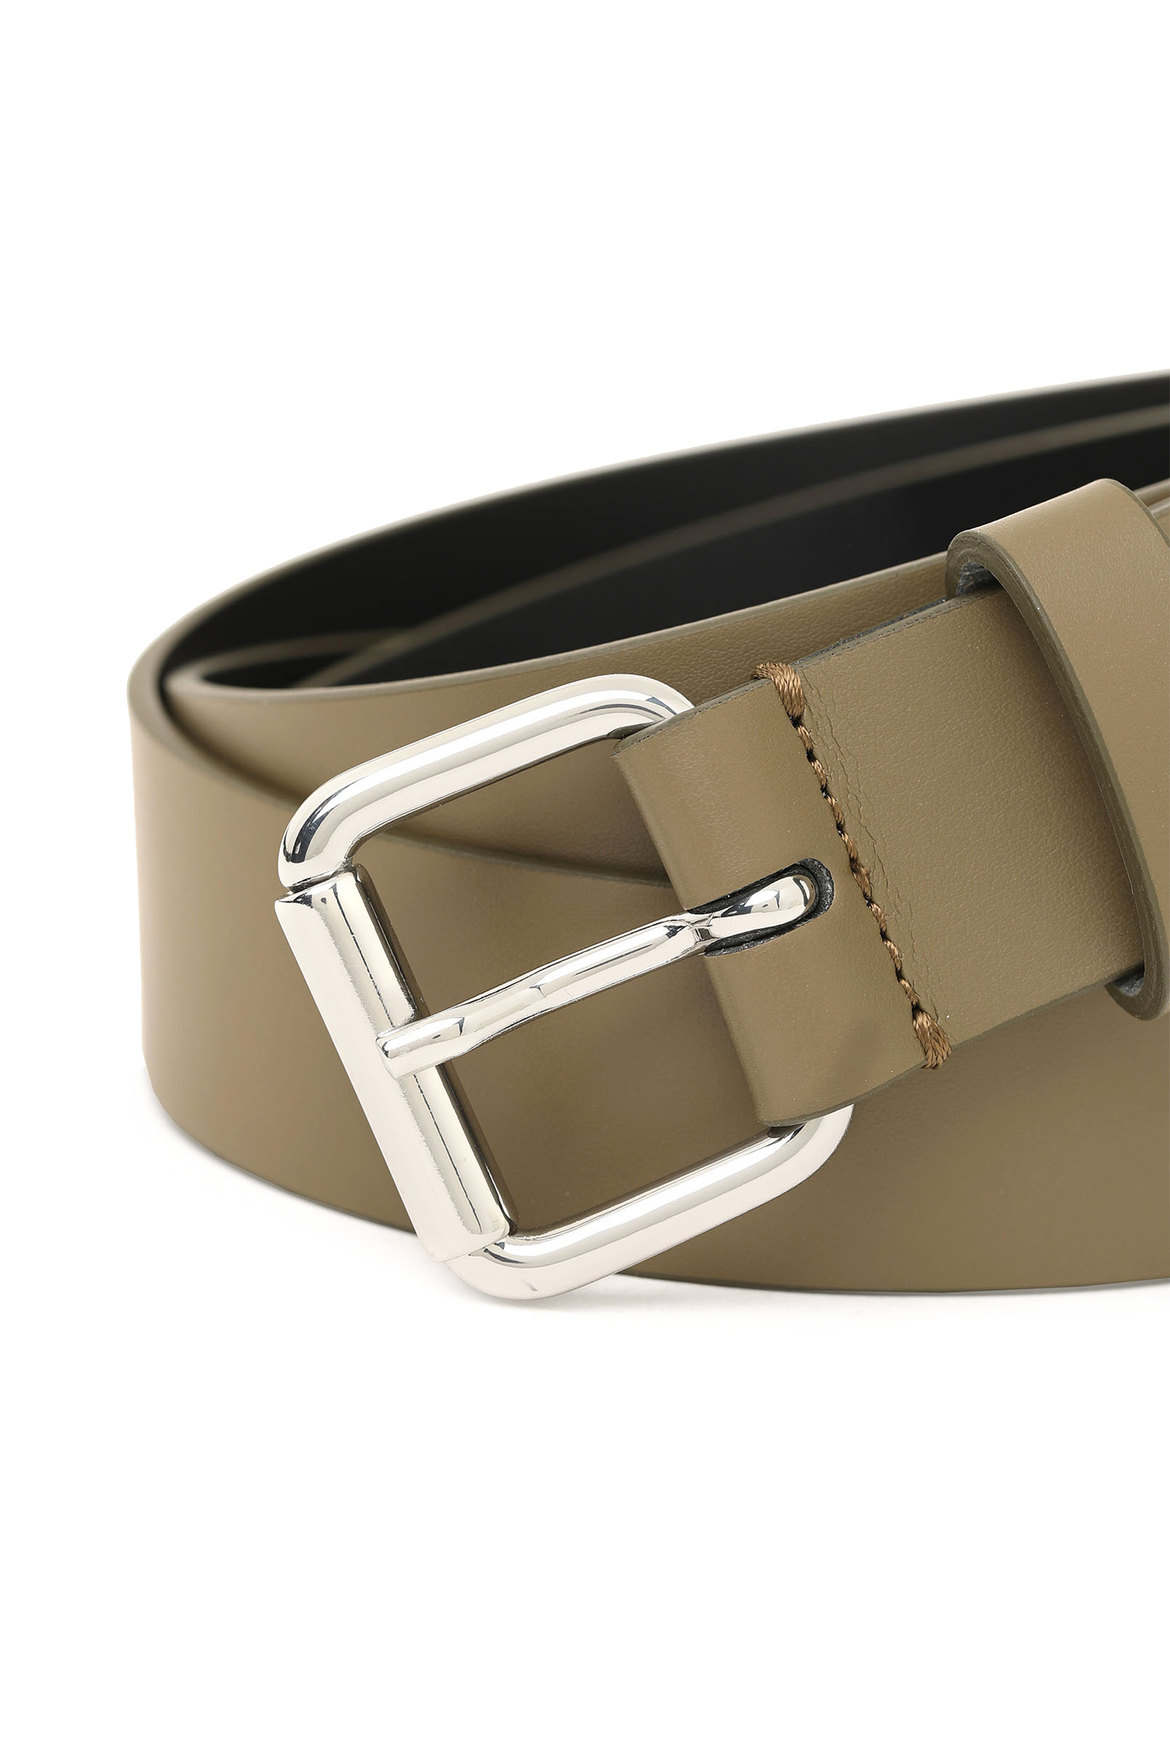 Faux-leather belt with debossed logo | Diesel